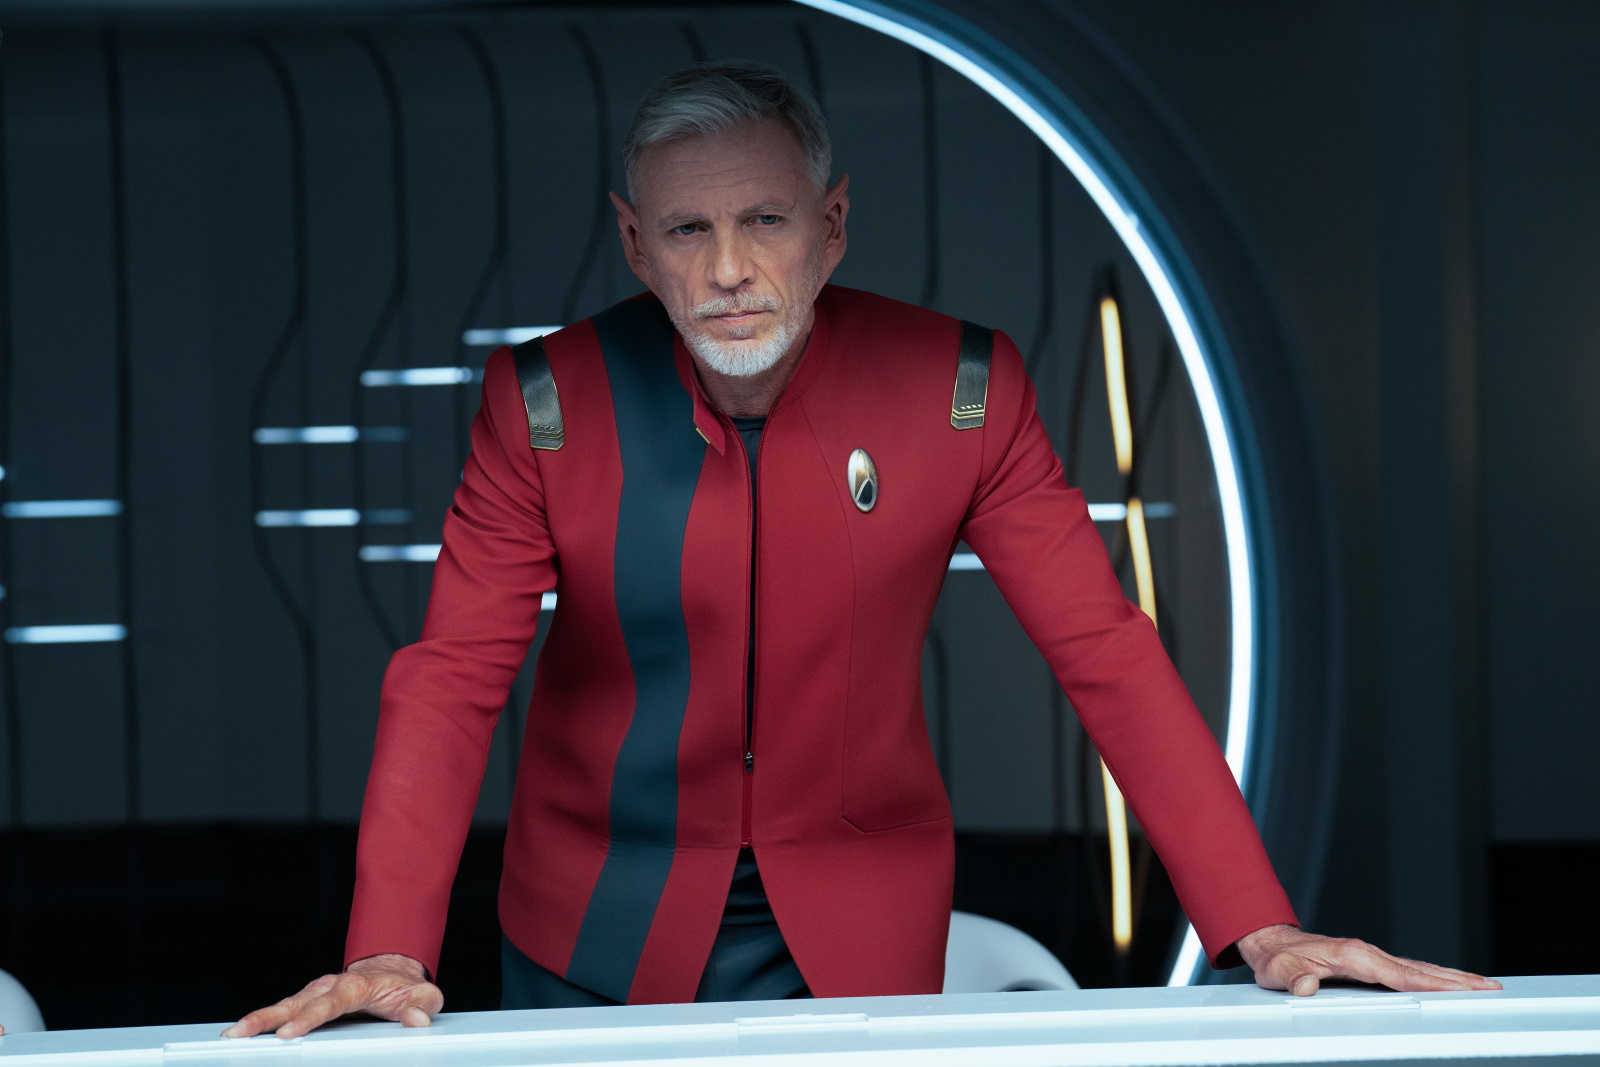 Callum Keith Rennie in "Star Trek: Discovery"